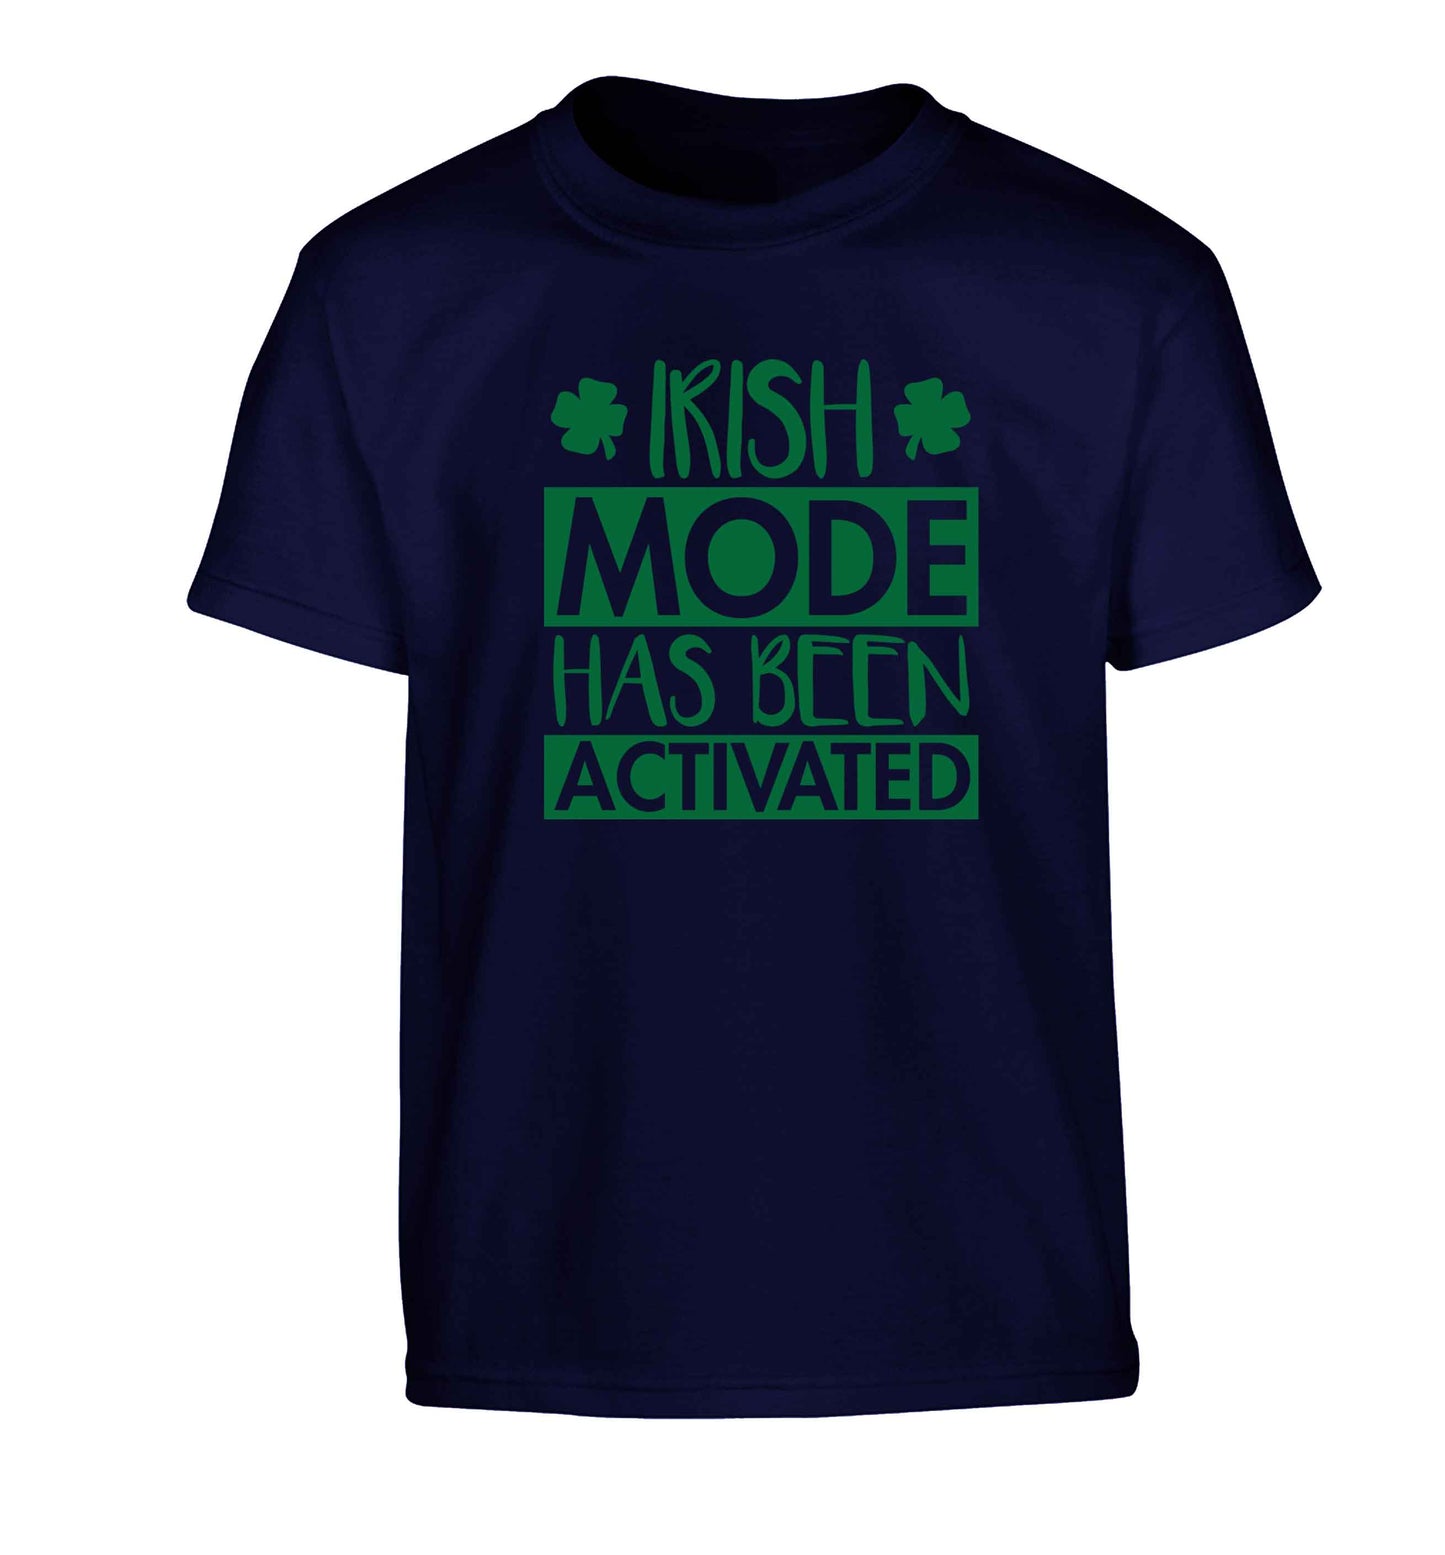 Irish mode has been activated Children's navy Tshirt 12-13 Years